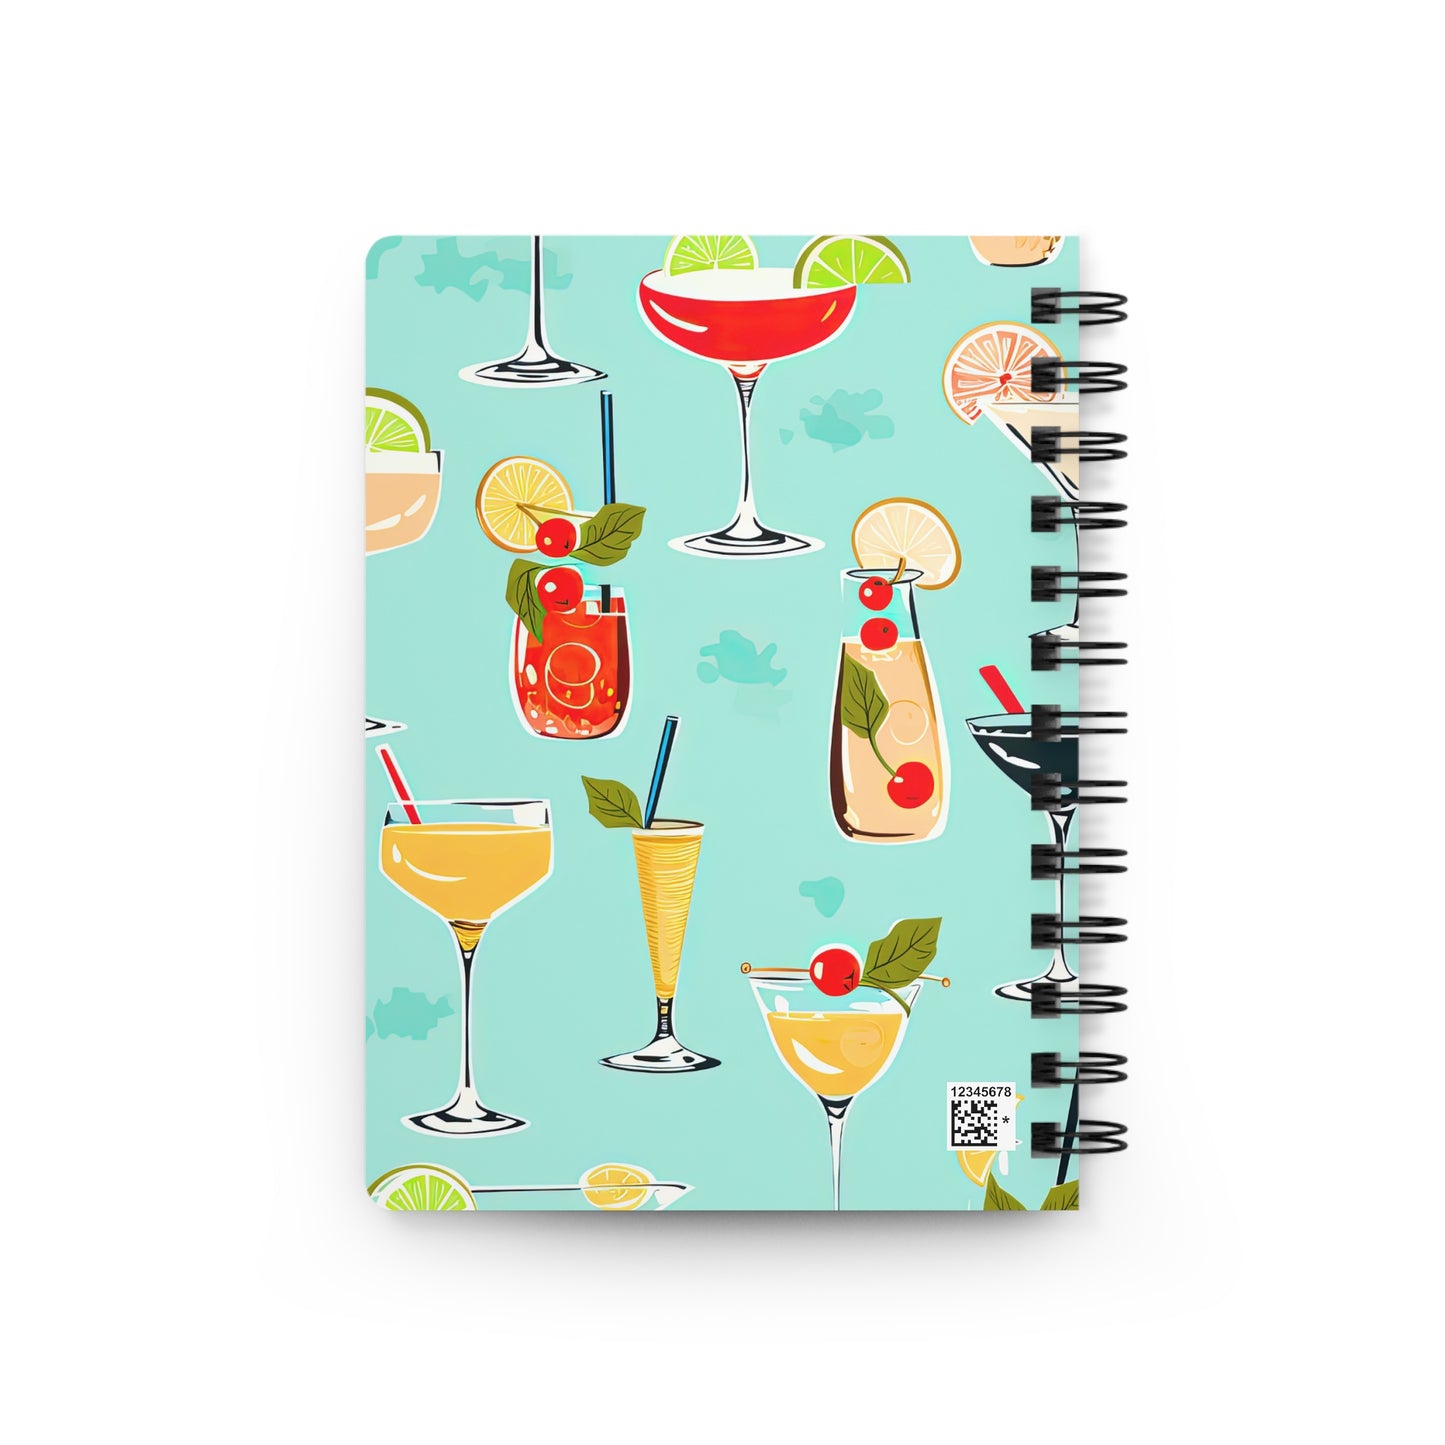 Summertime Cocktail Recipes Book Midcentury Modern Pattern Writing Spiral Bound Journal